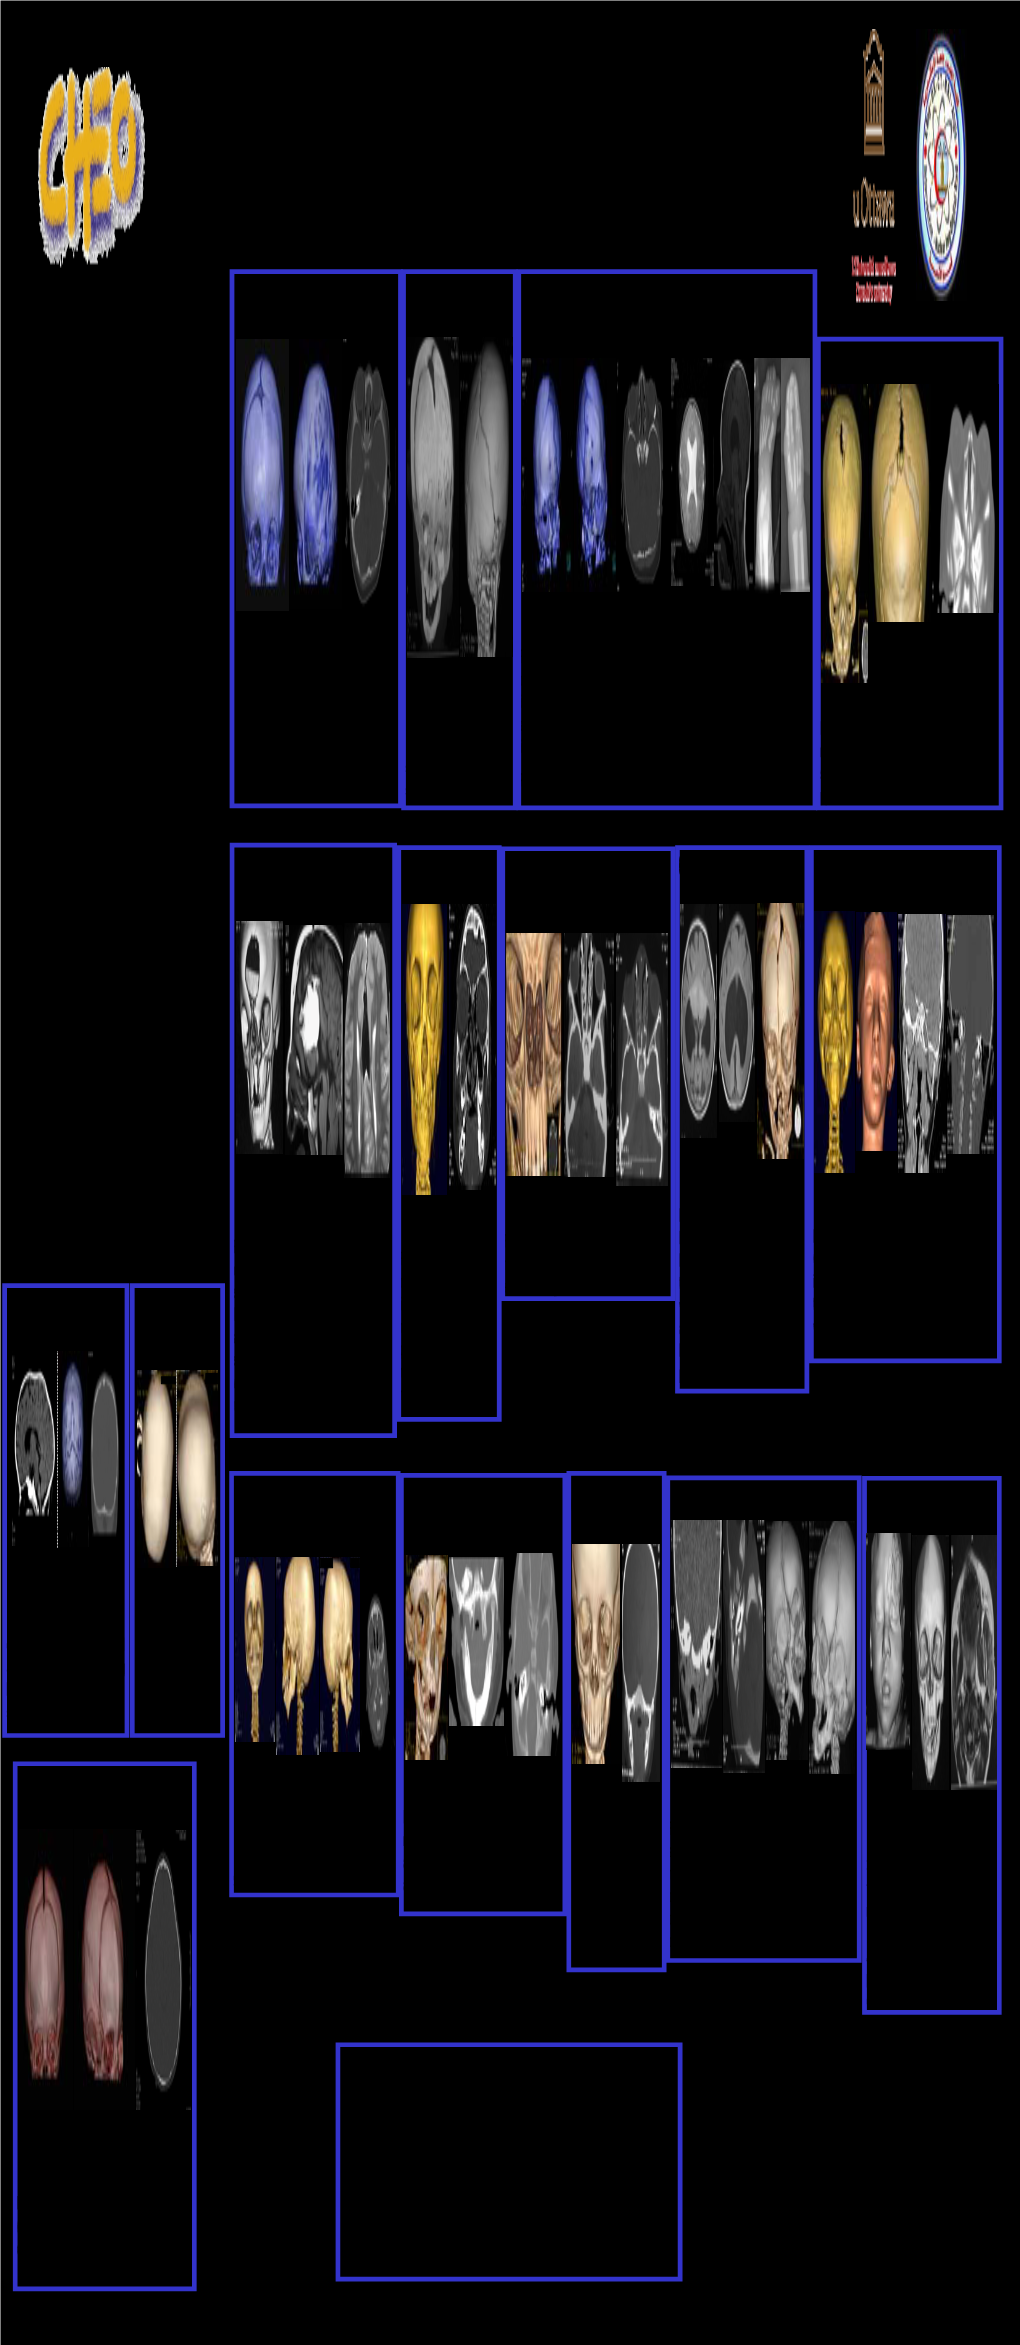 Congenital Craniofacial Deformities: Spectrum of Multidetector Computed Tomographic Findings